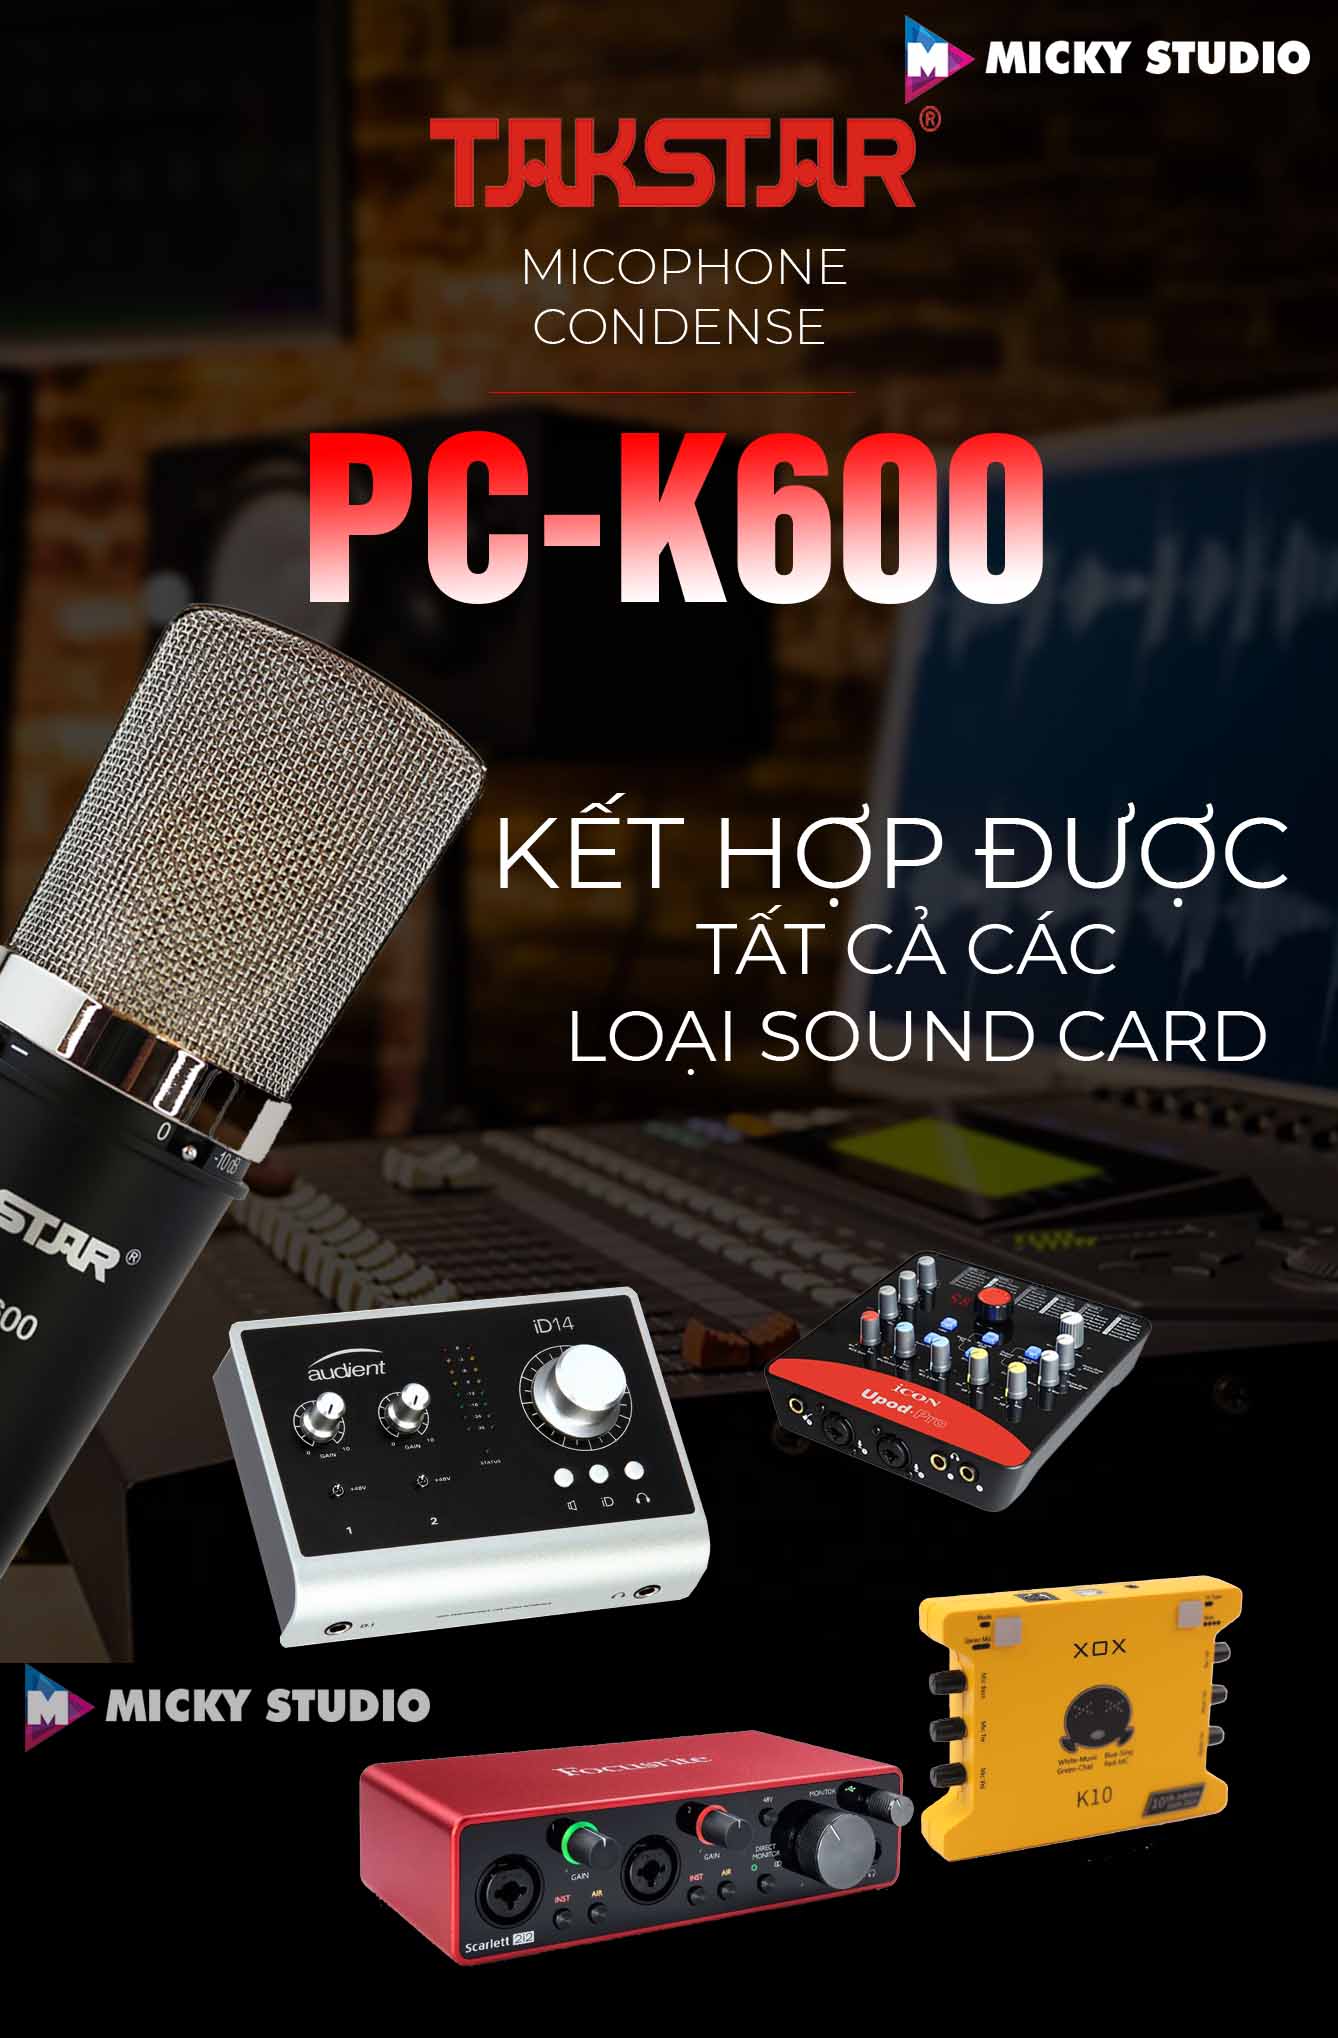 soundcard audient id14 mic pc-k600